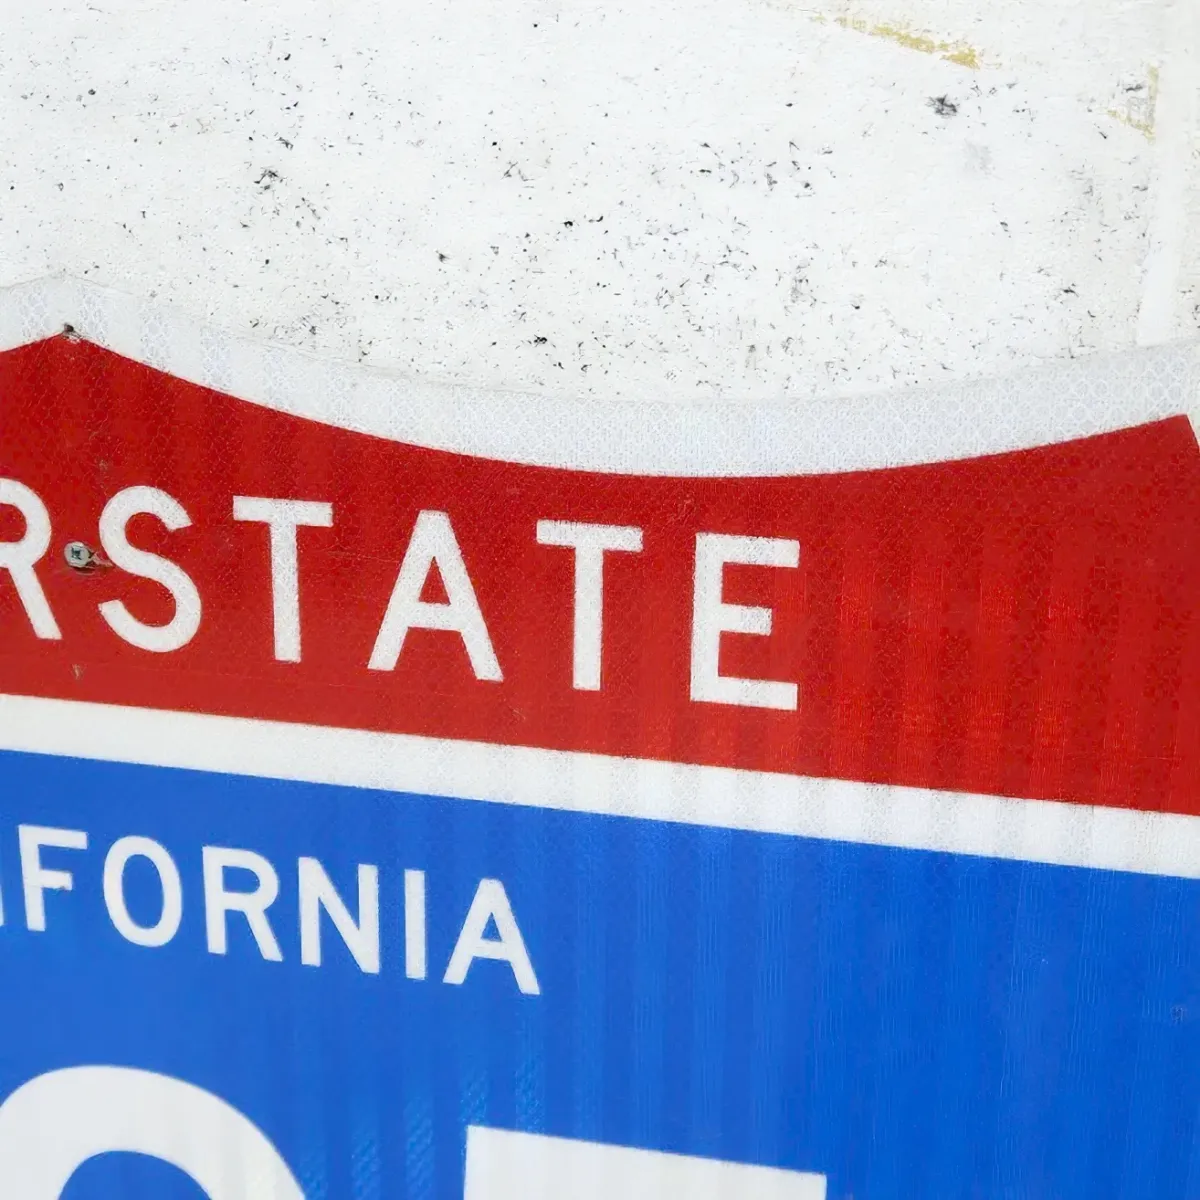 INTERSTATE CALIFORNIA 405 ロードサイン